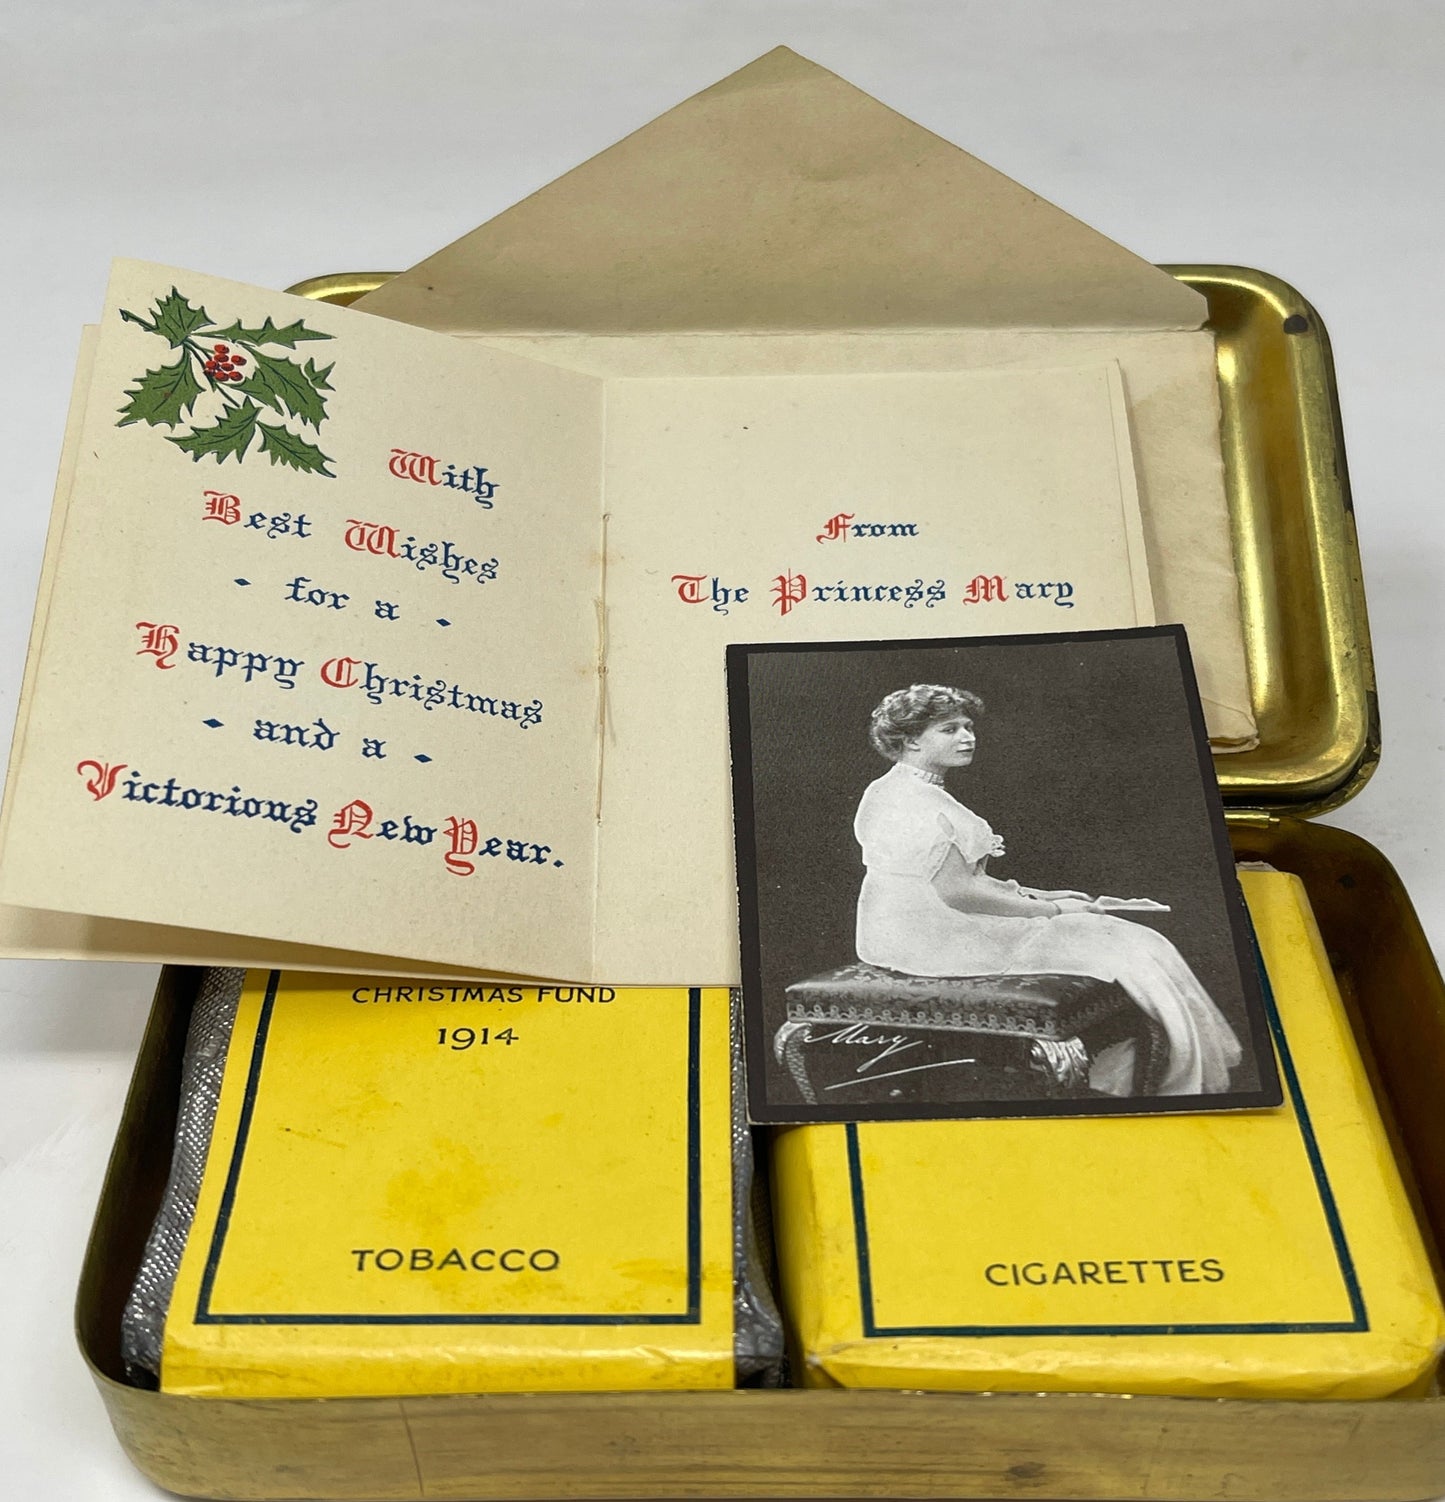 WW1 The Princess Mary Gift Fund box